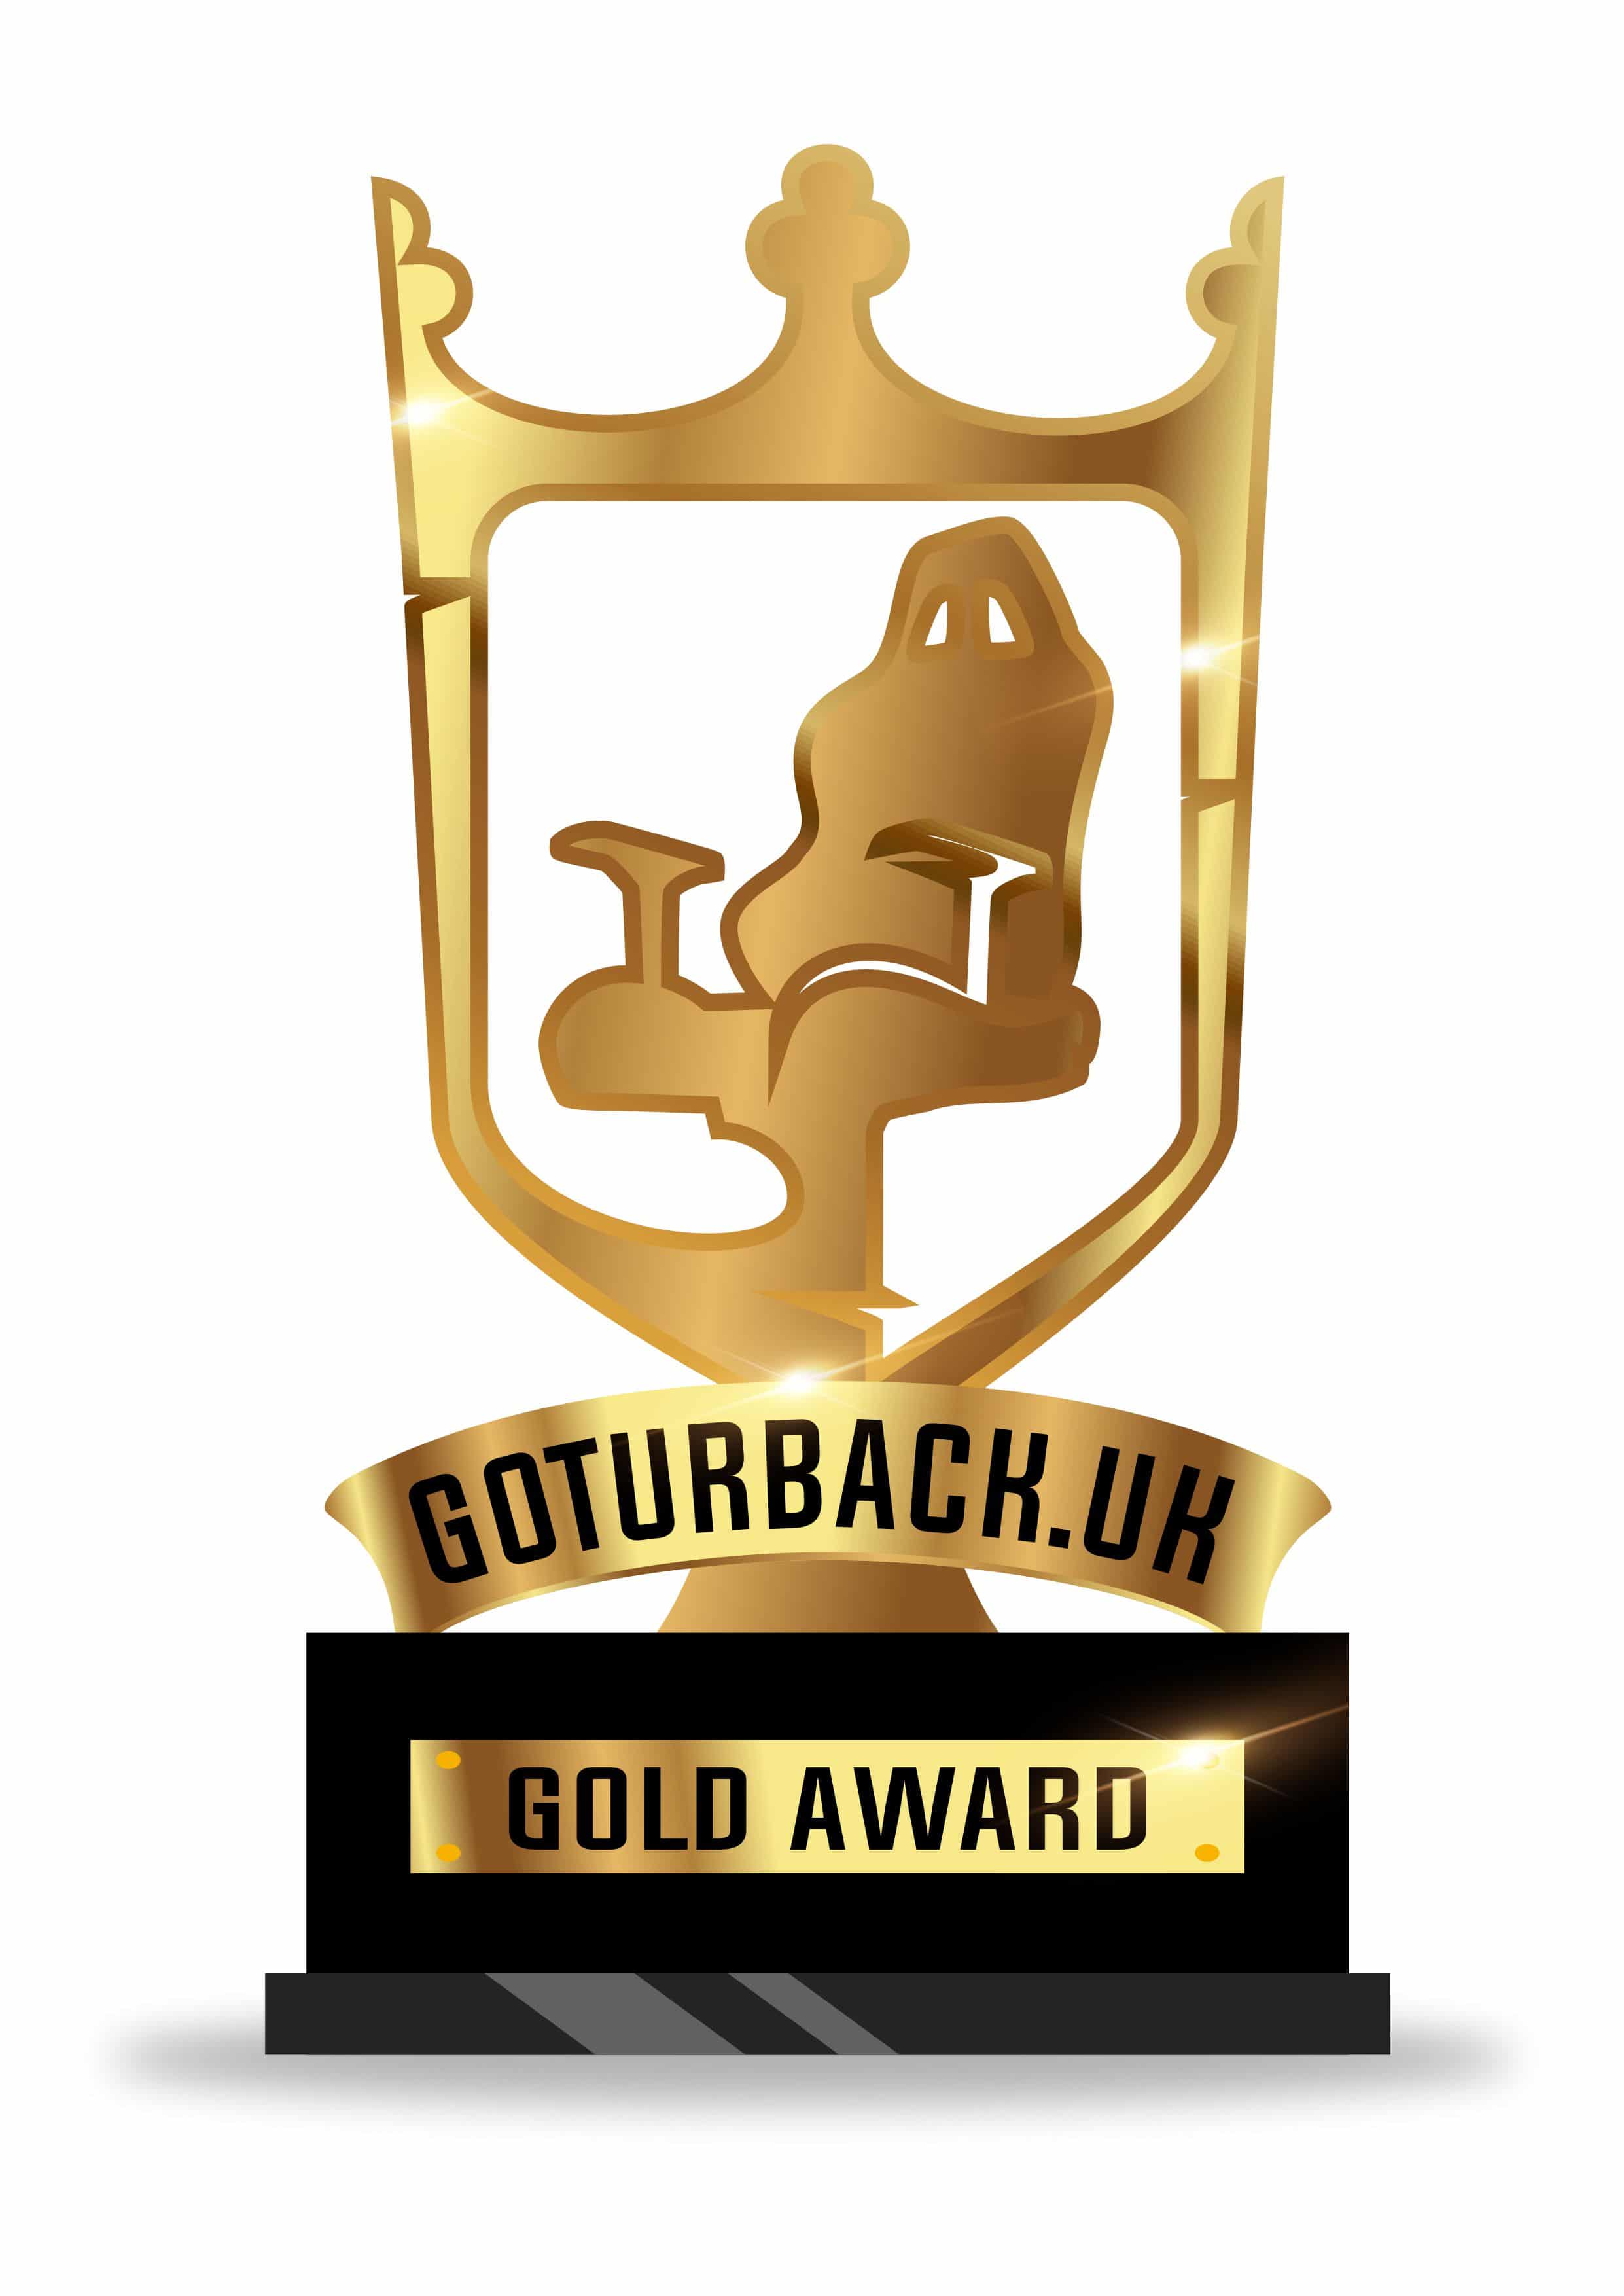 goturback.uk gold award